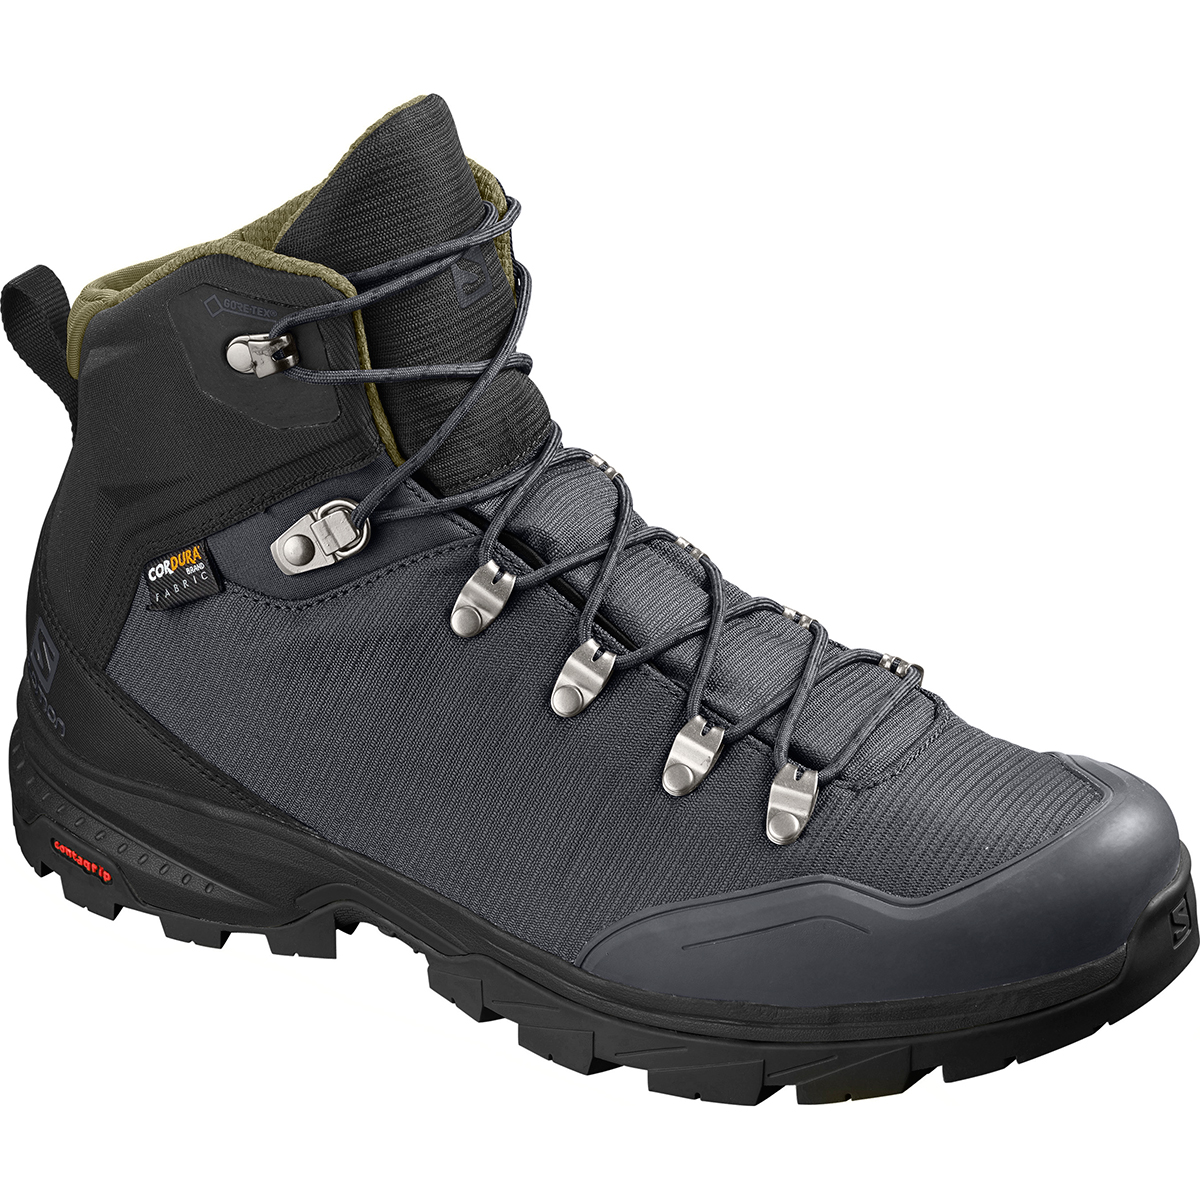 Salomon Men's Outback 500 Gtx Hiking Boots - Size 8.5